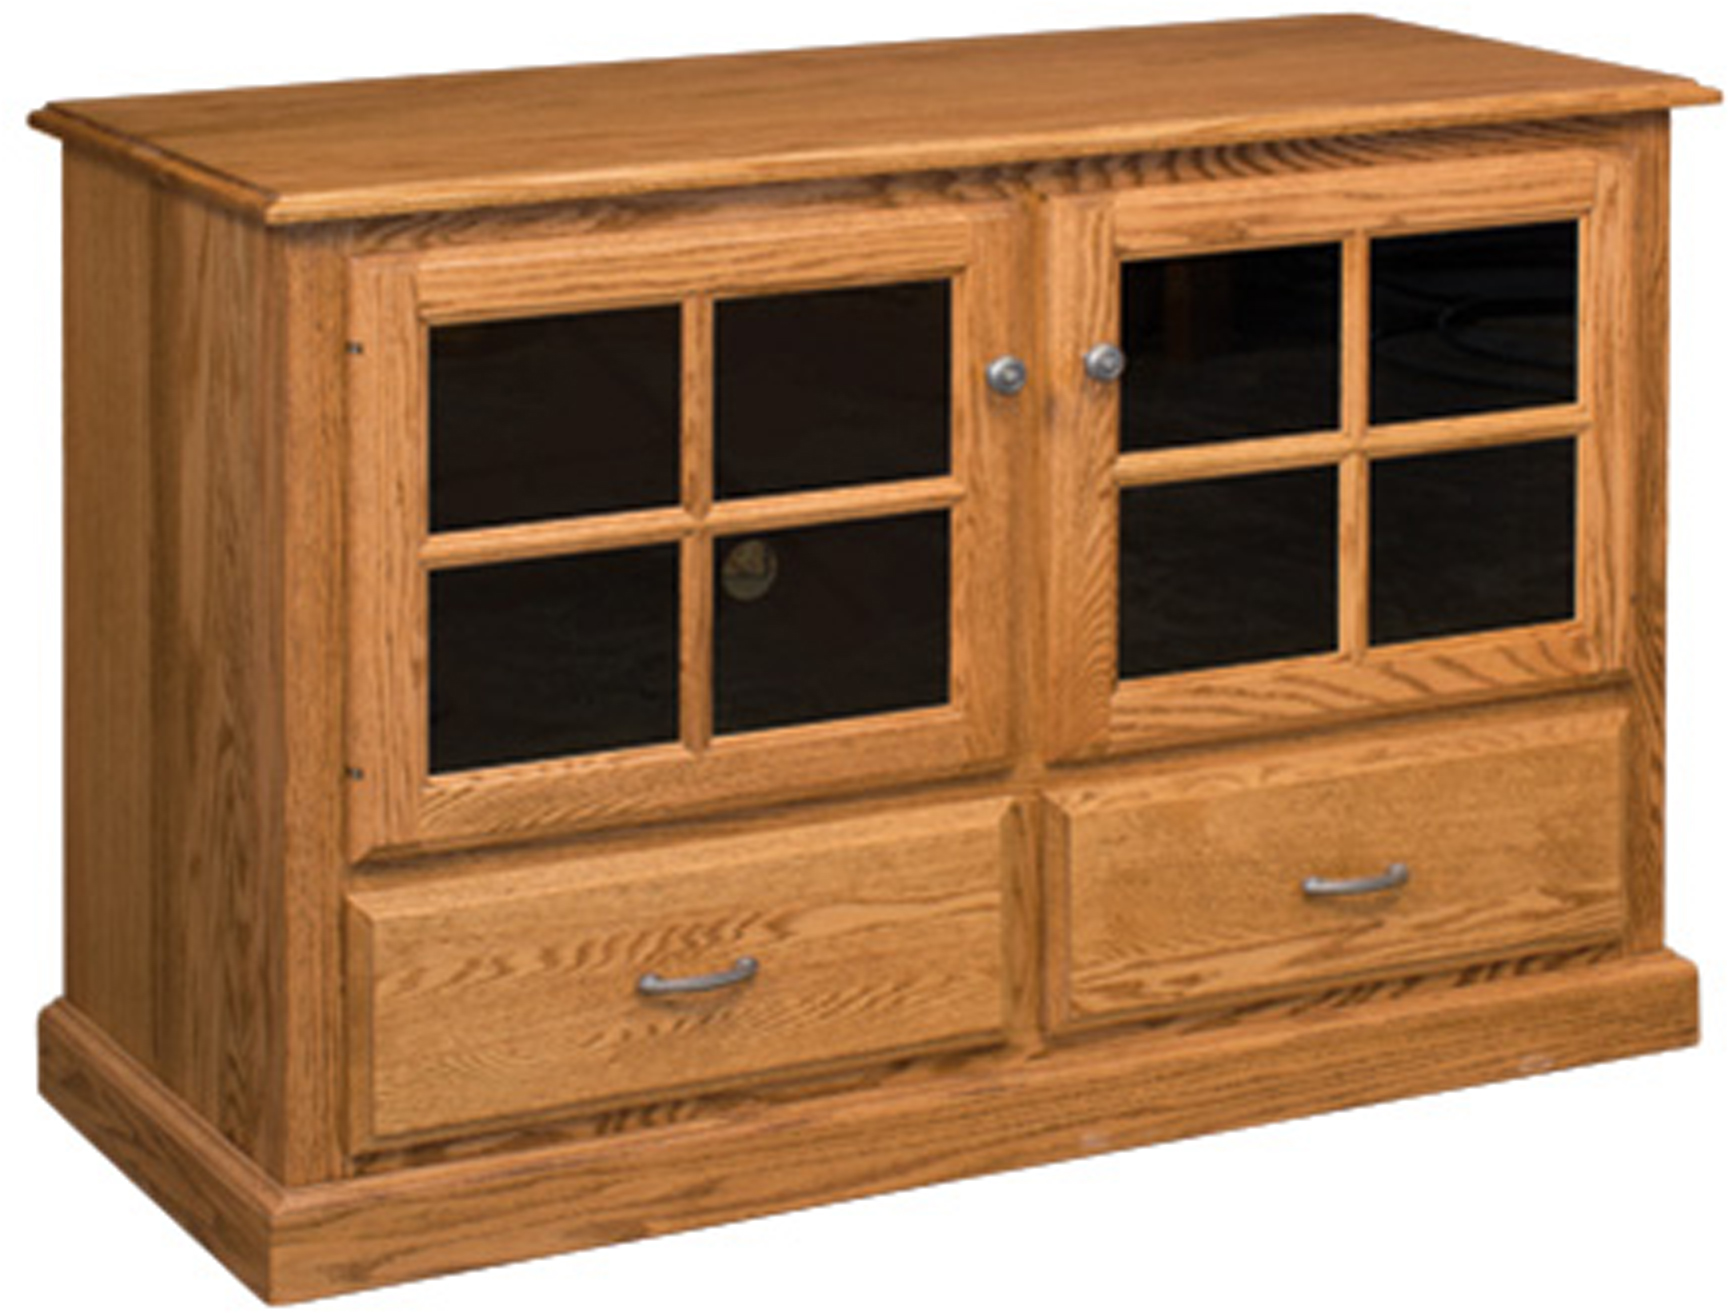 Eden TV Cabinet | Amish TV Cabinet | Solid Hardwood TV Console